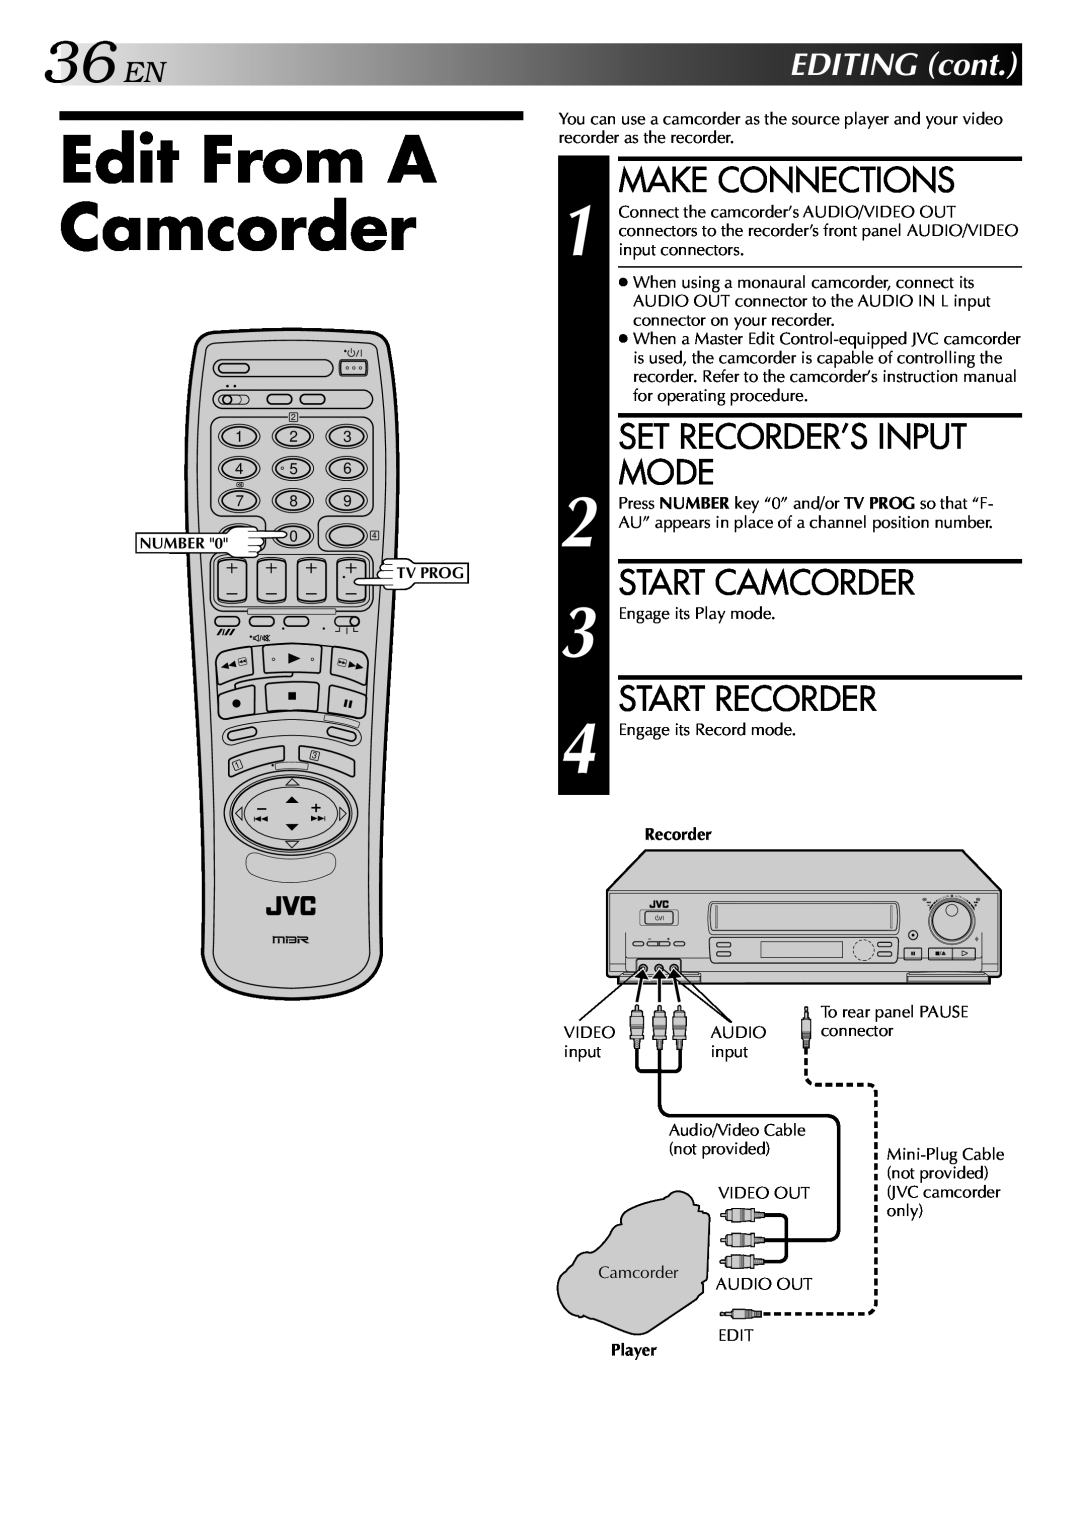 JVC HR-DD848E Edit From A Camcorder, 36EN, Set Recorder’S Input, Mode, Start Camcorder, Start Recorder, EDITINGcont 